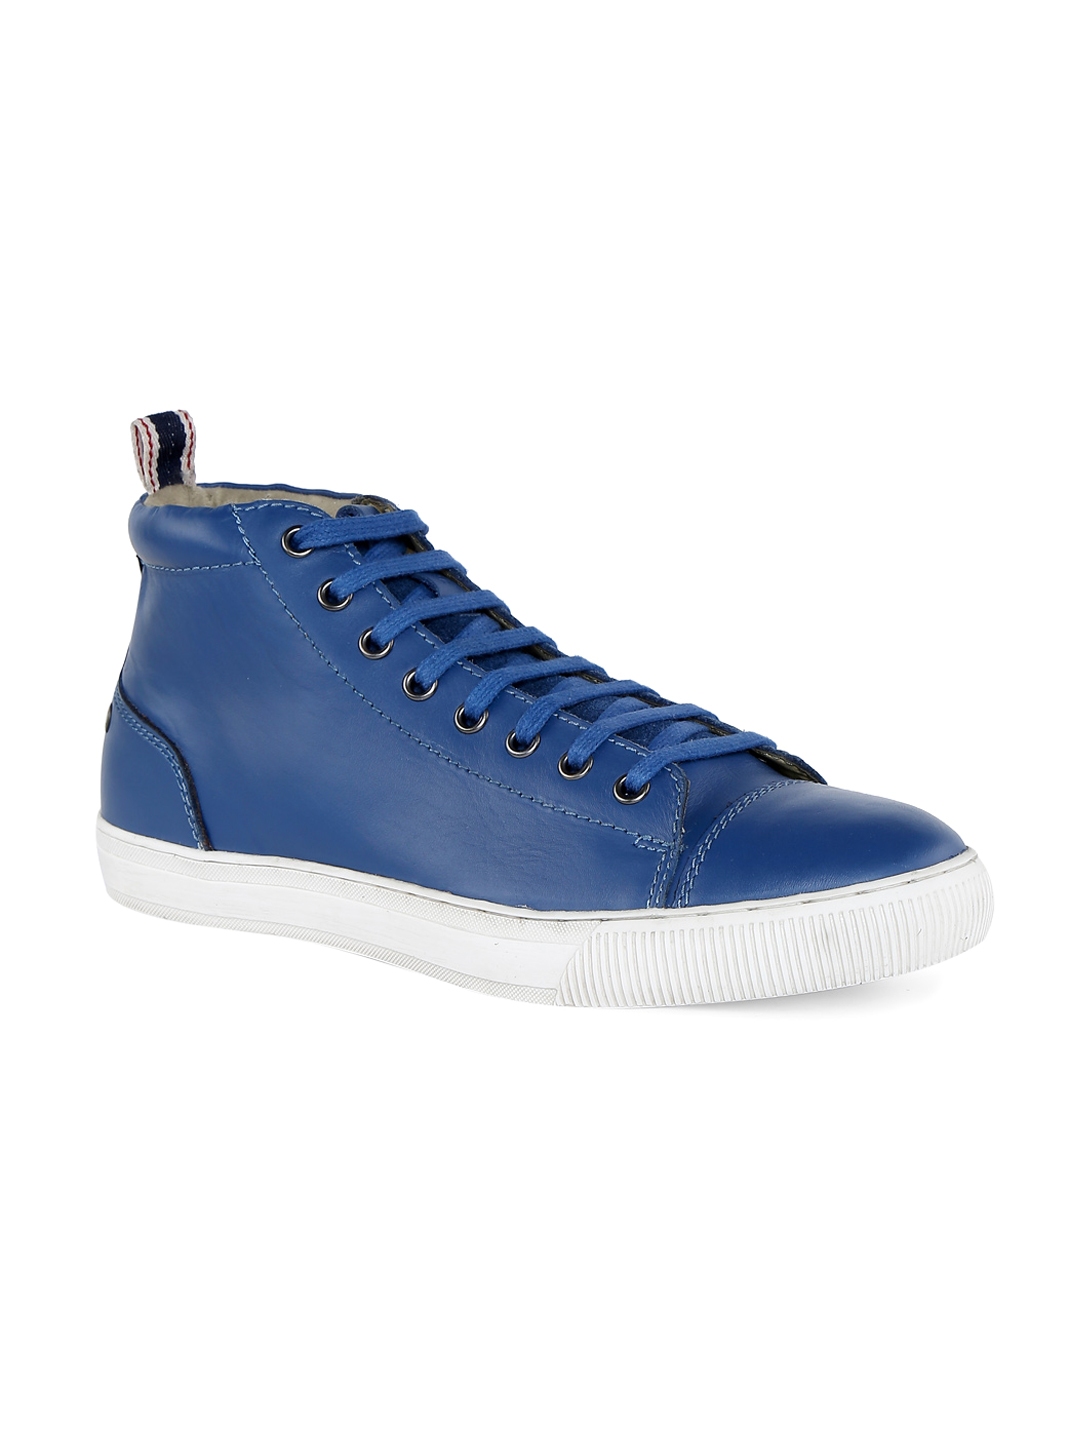 Buy Jack & Jones Men Blue Solid Leather Mid Top Sneakers - Casual Shoes ...